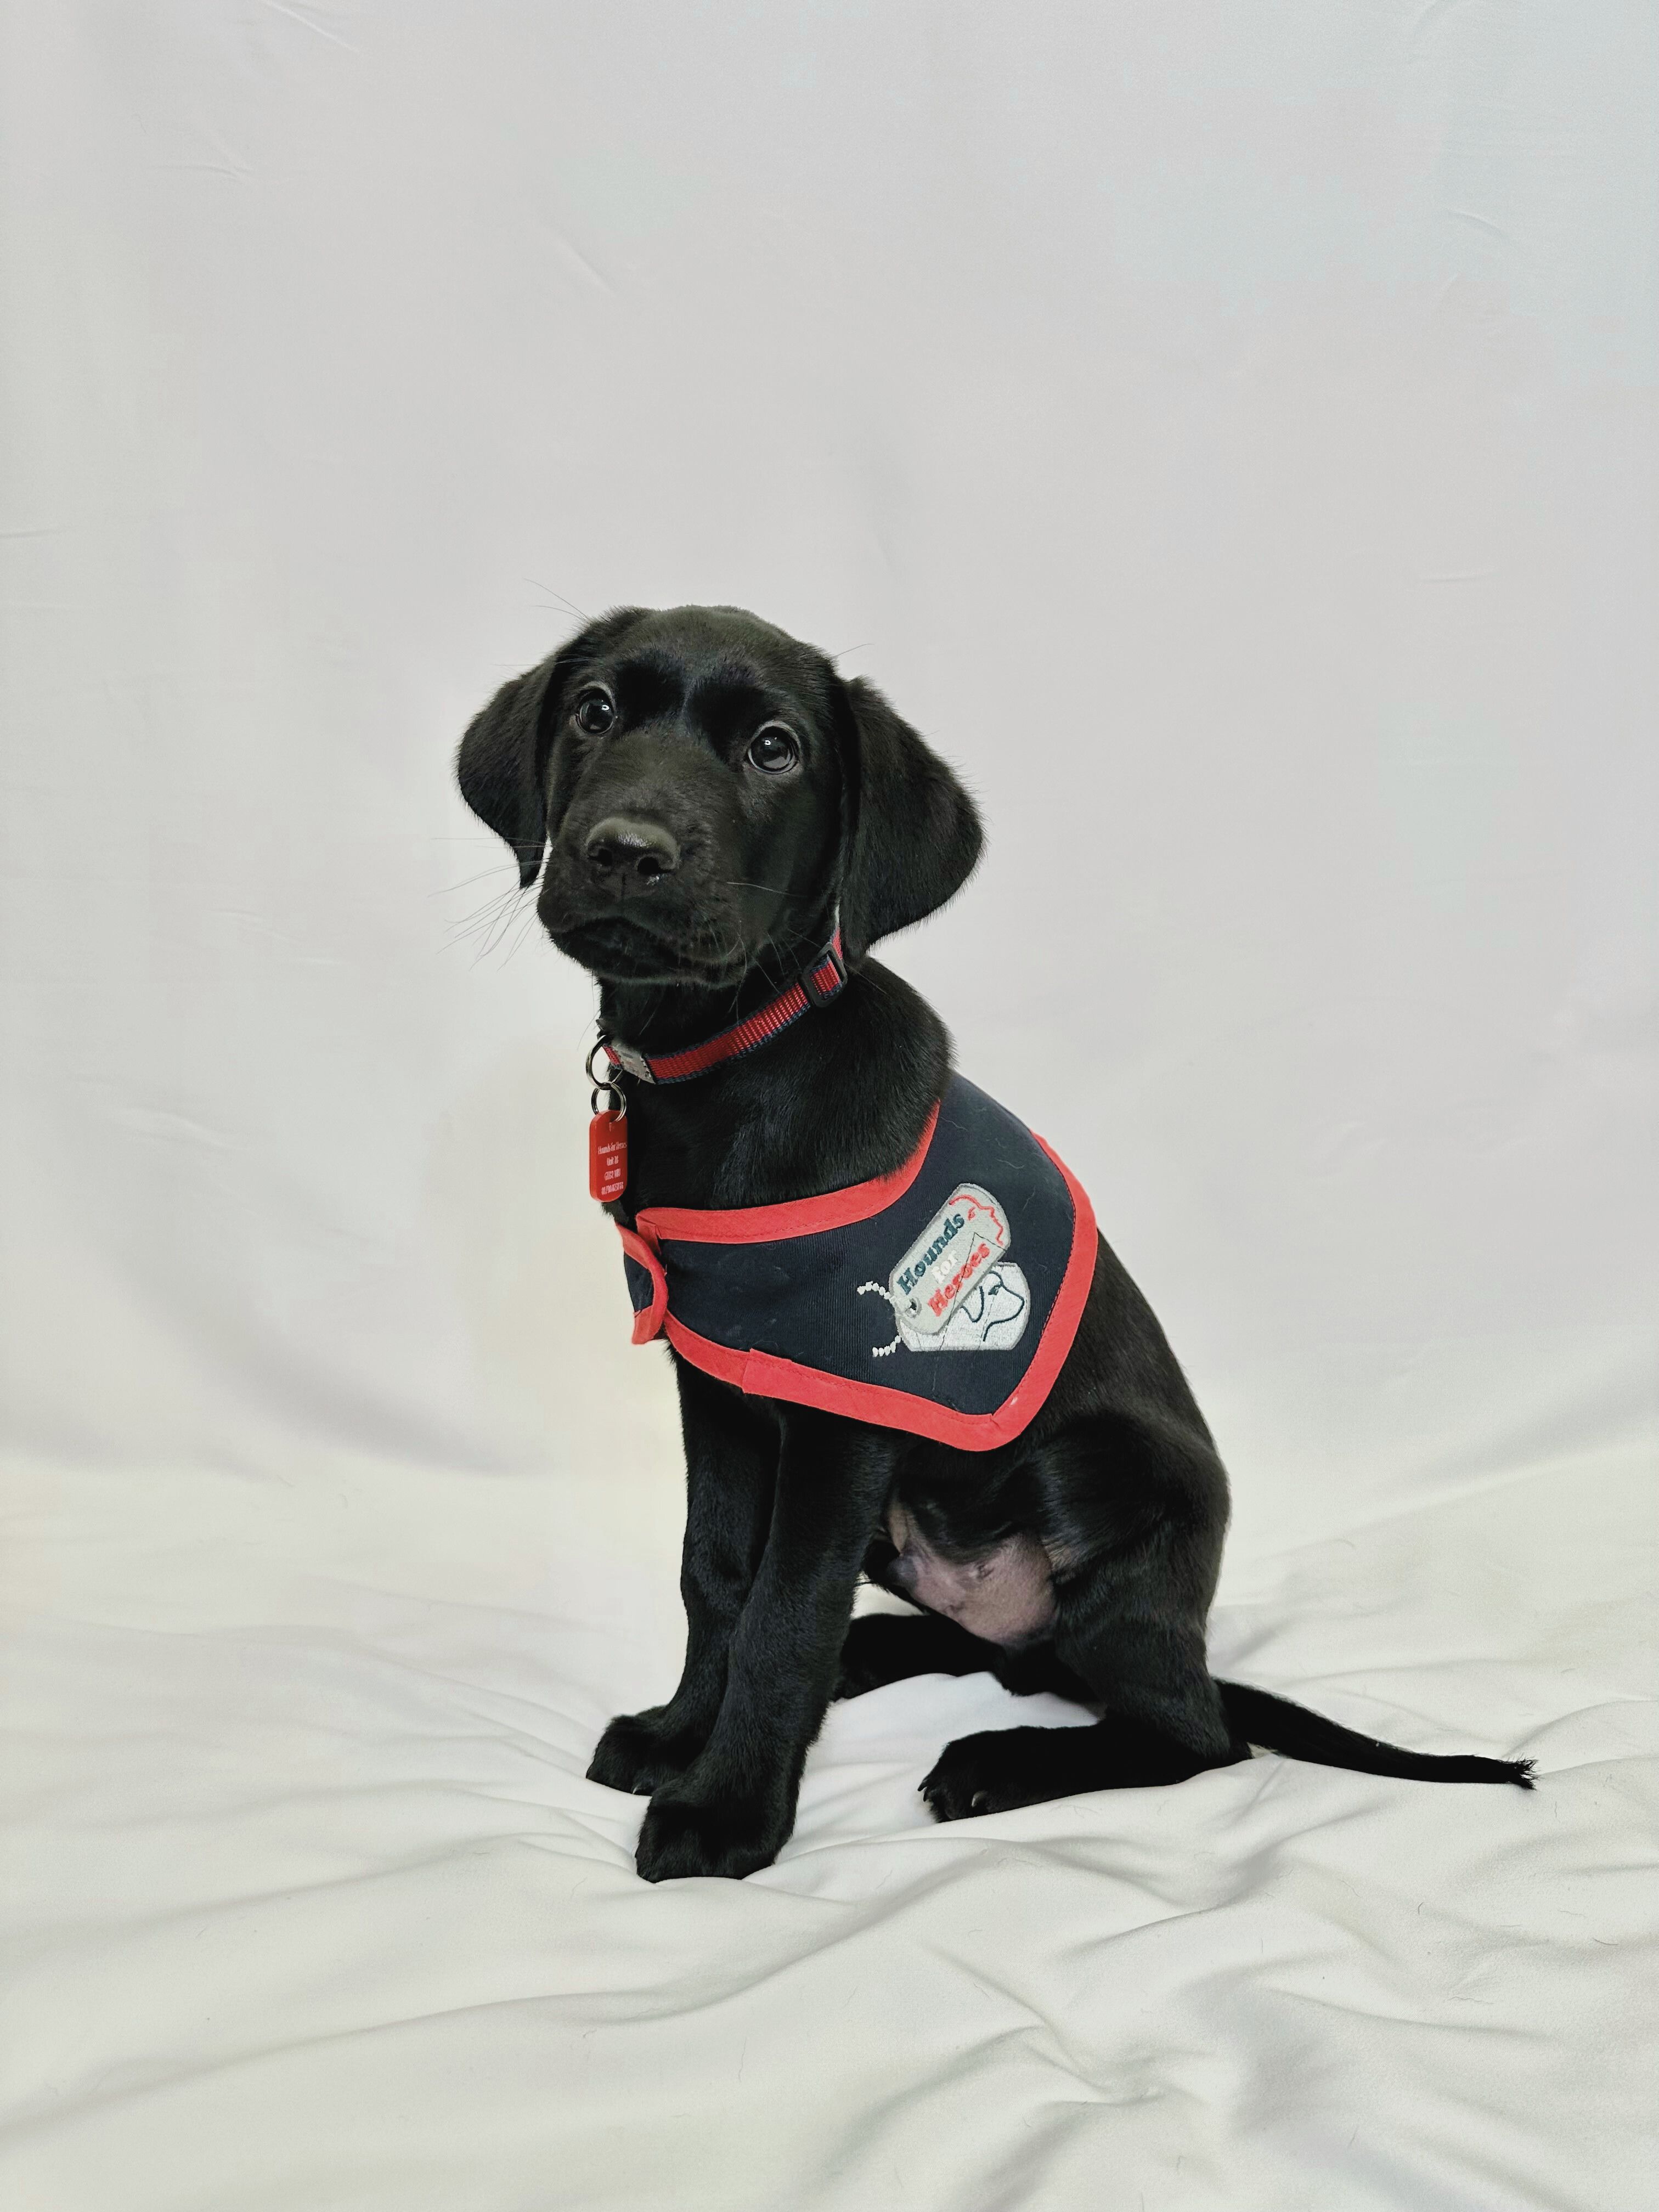 Black Labrador puppy wearing an assistance dog jacket